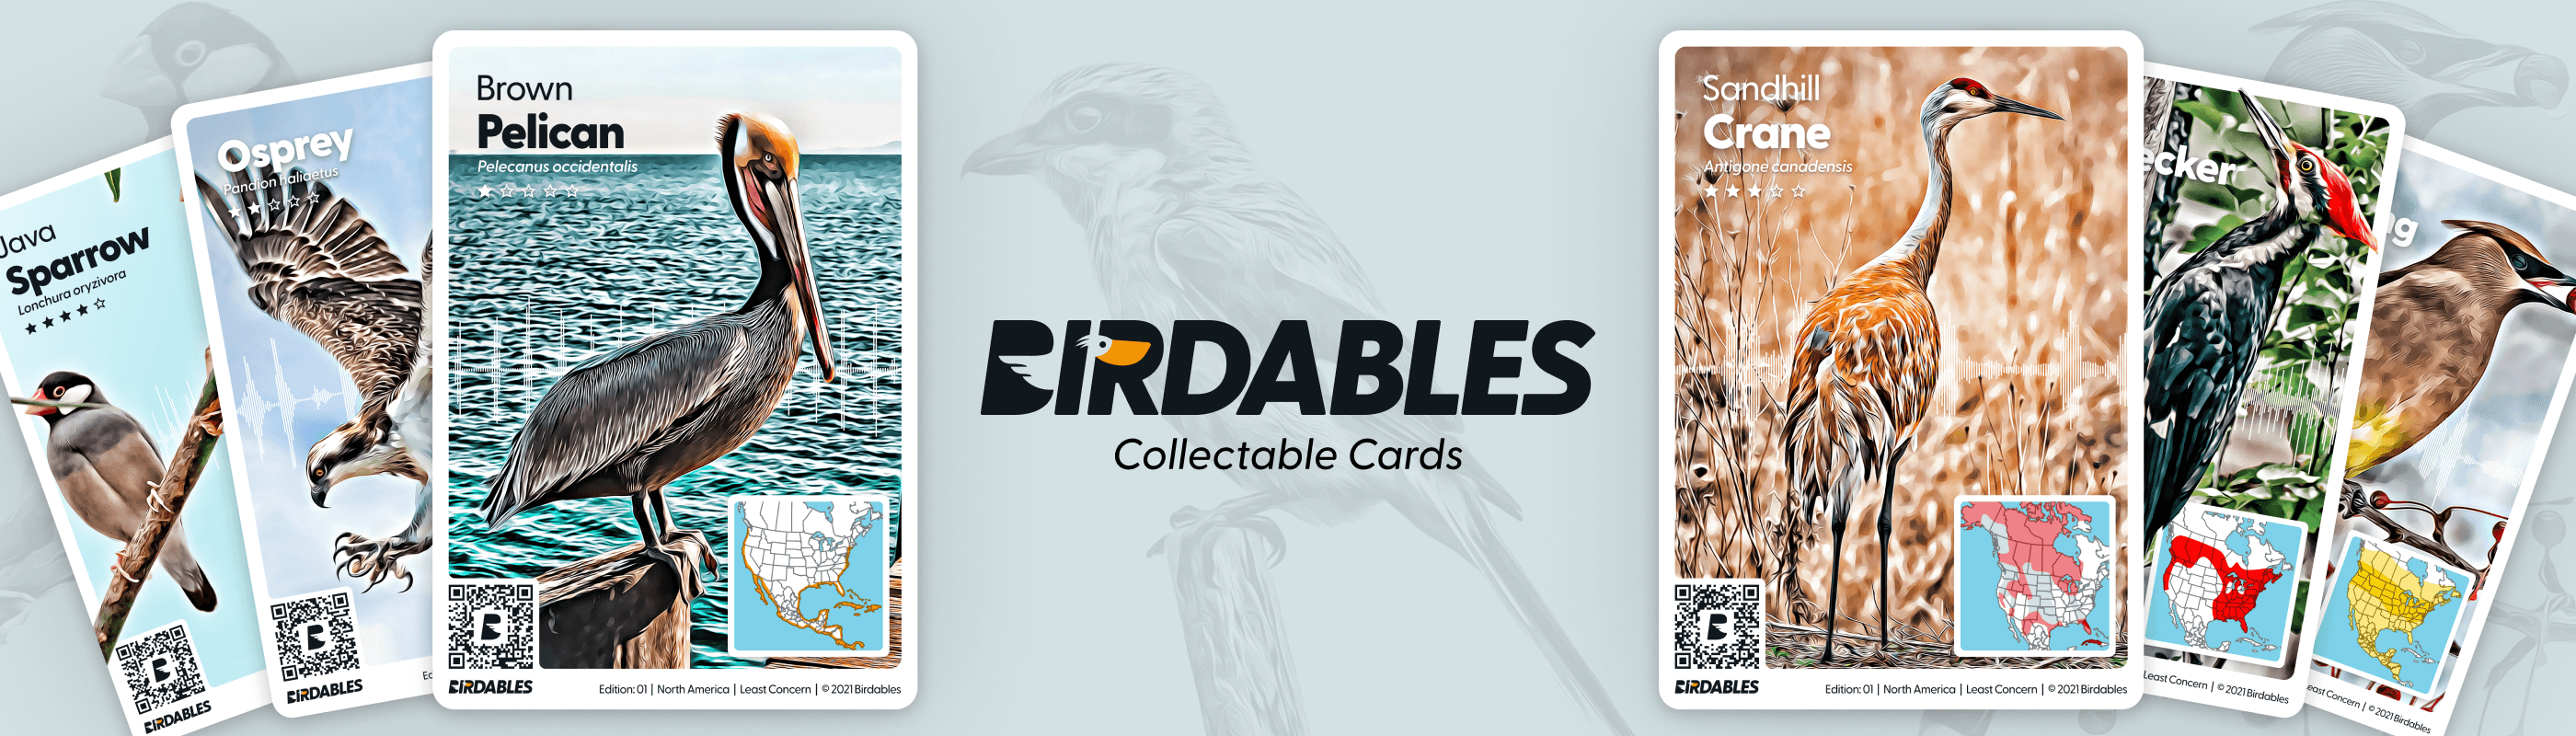 Birdables banner